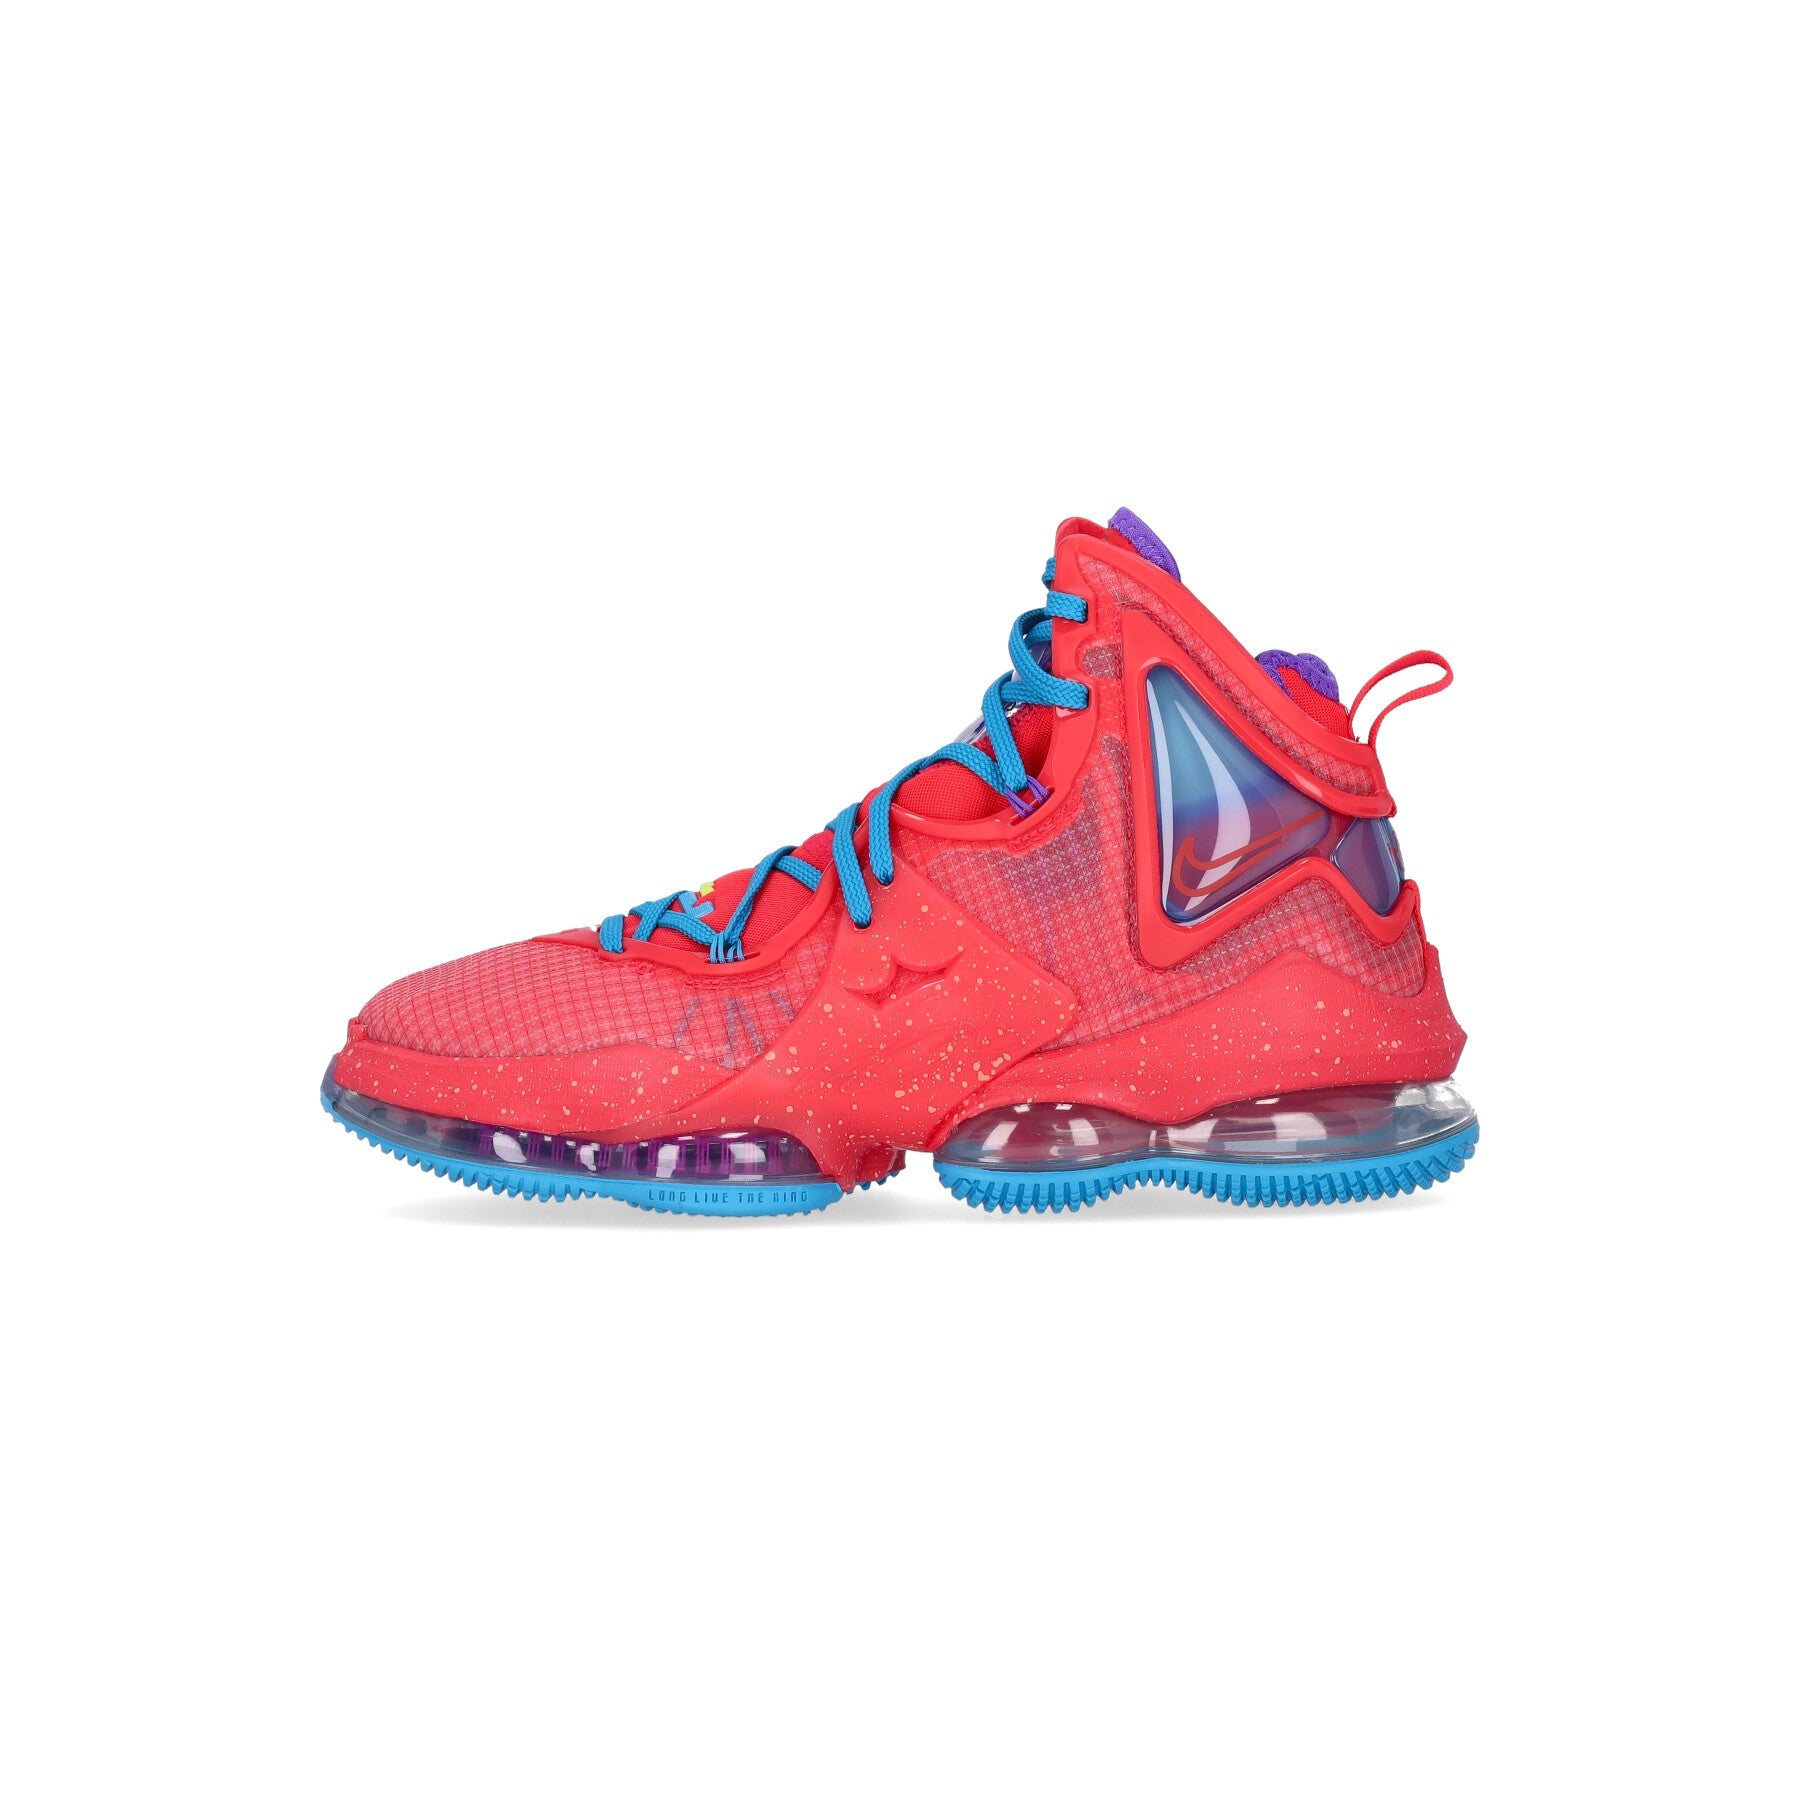 Lebron Xix Men's Basketball Shoe Siren Red/siren Red/laser Blue